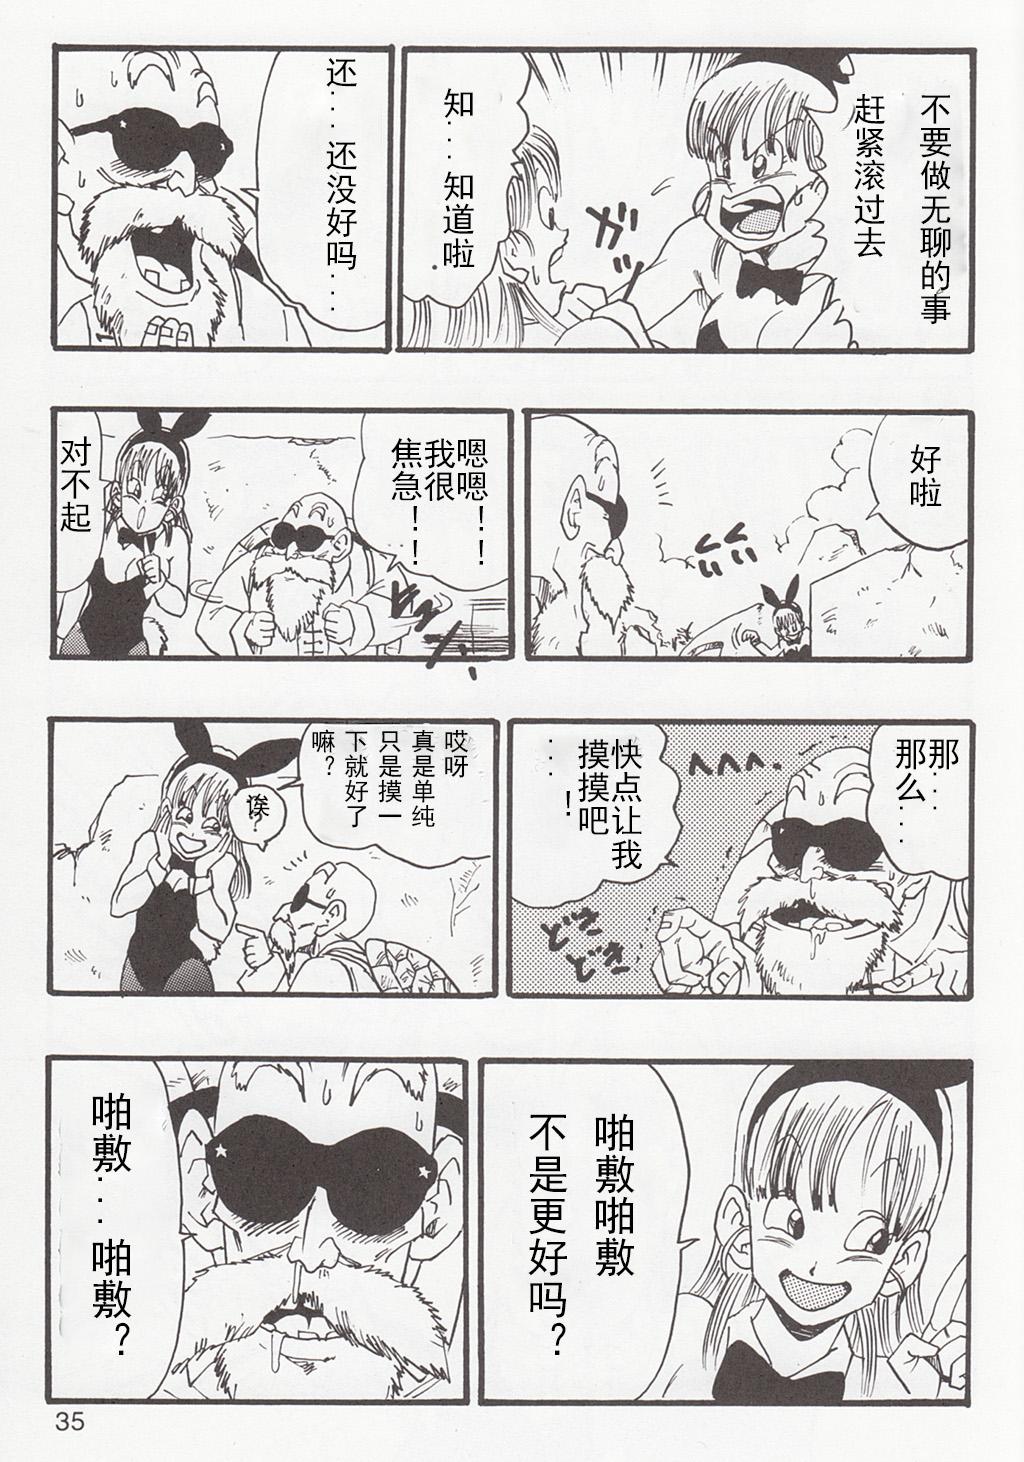  Dragon Ball EB 1 - Episode of Bulma - Dragon ball Girls - Page 4